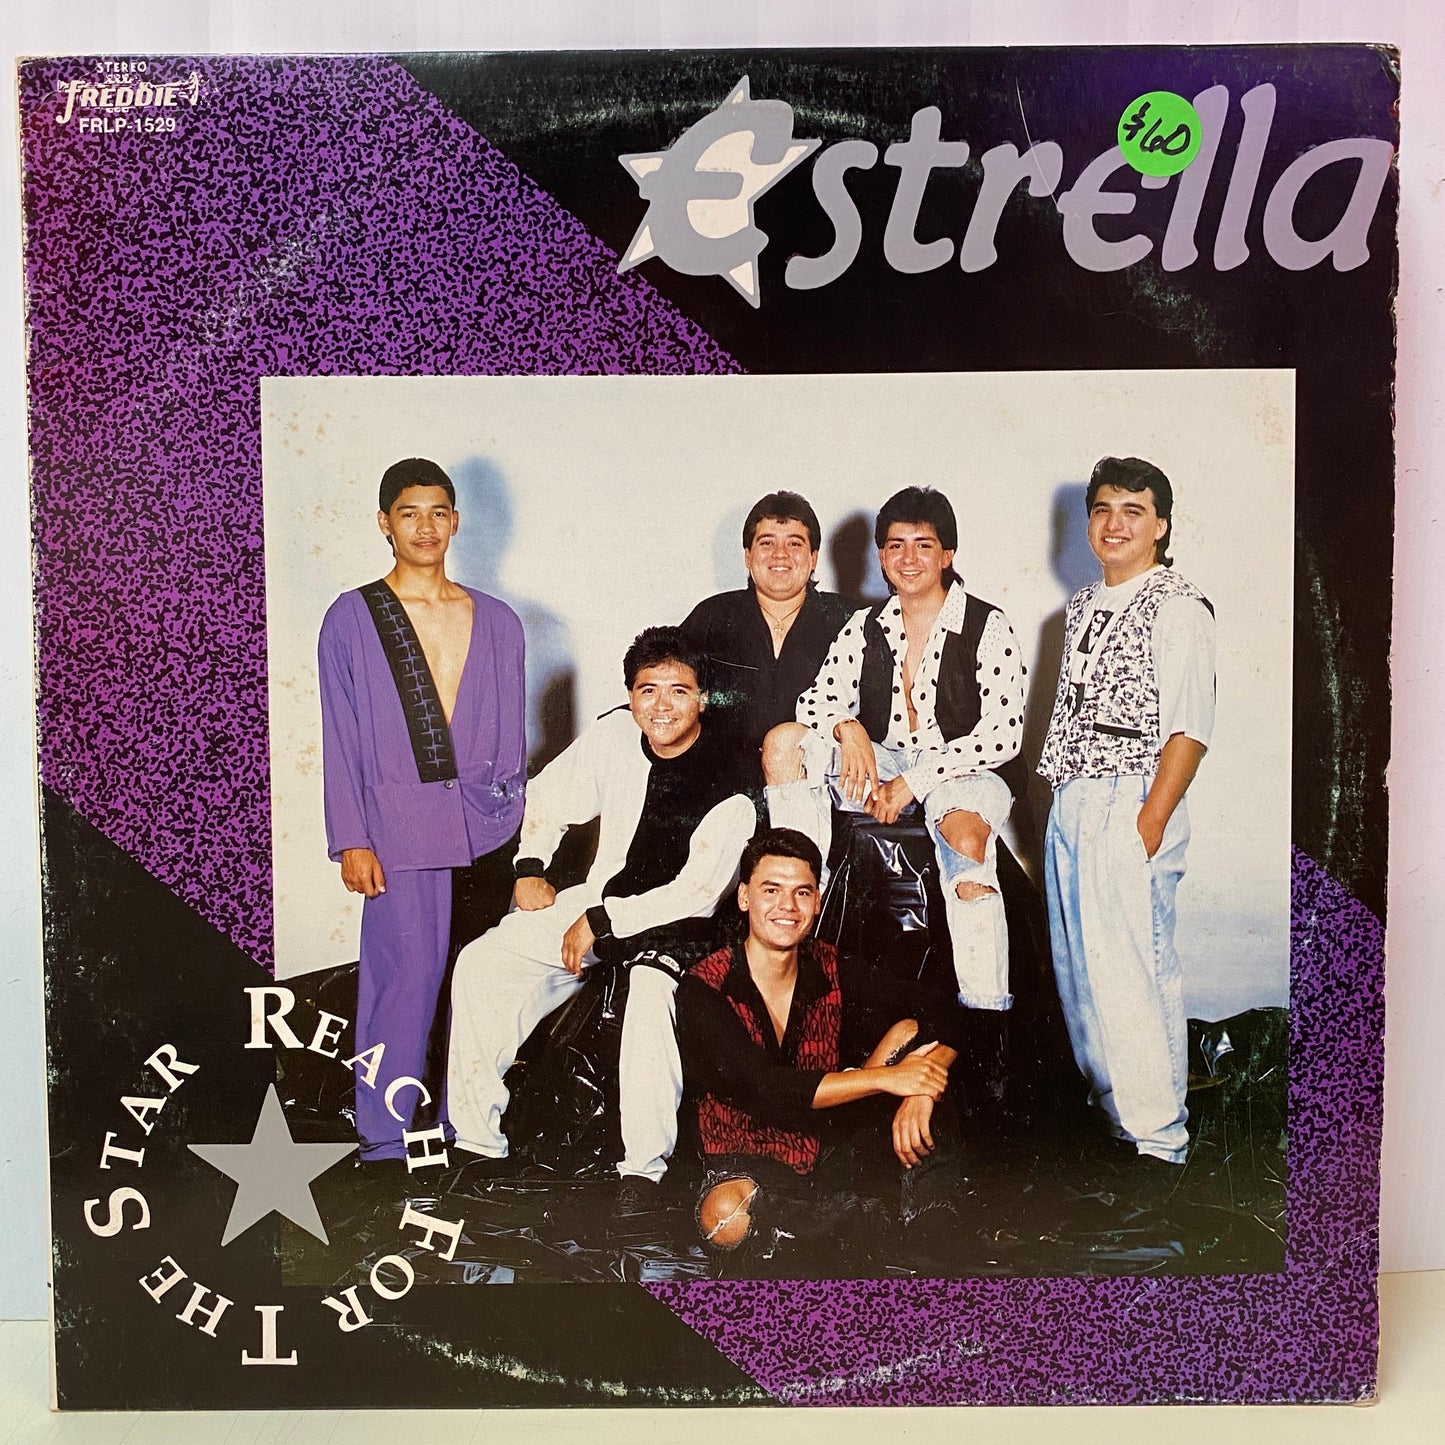 Estrella - Reach for the Star (Vinyl)